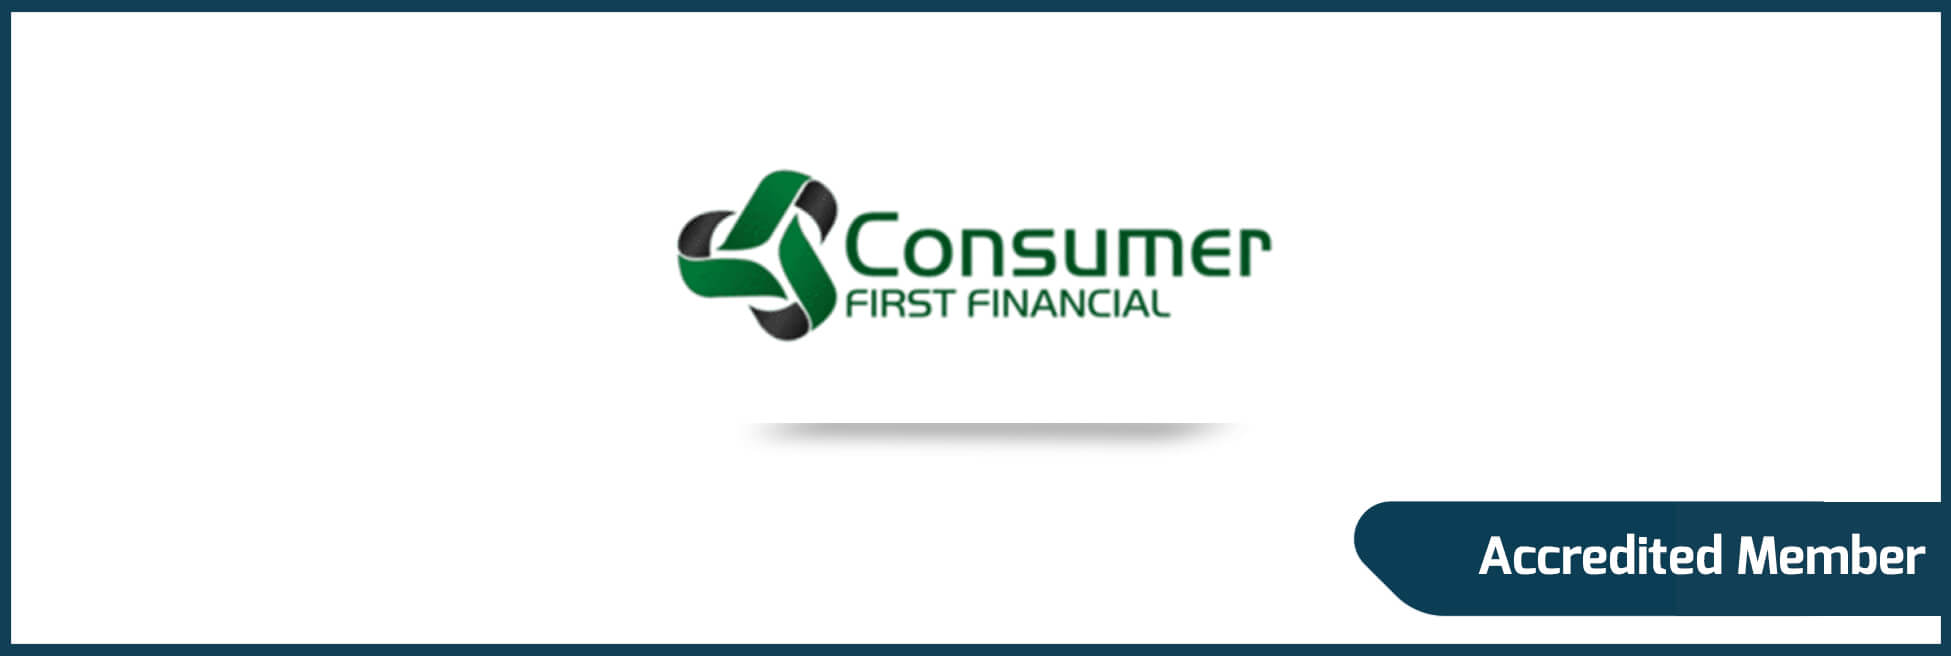 Consumer First Financial, Inc.